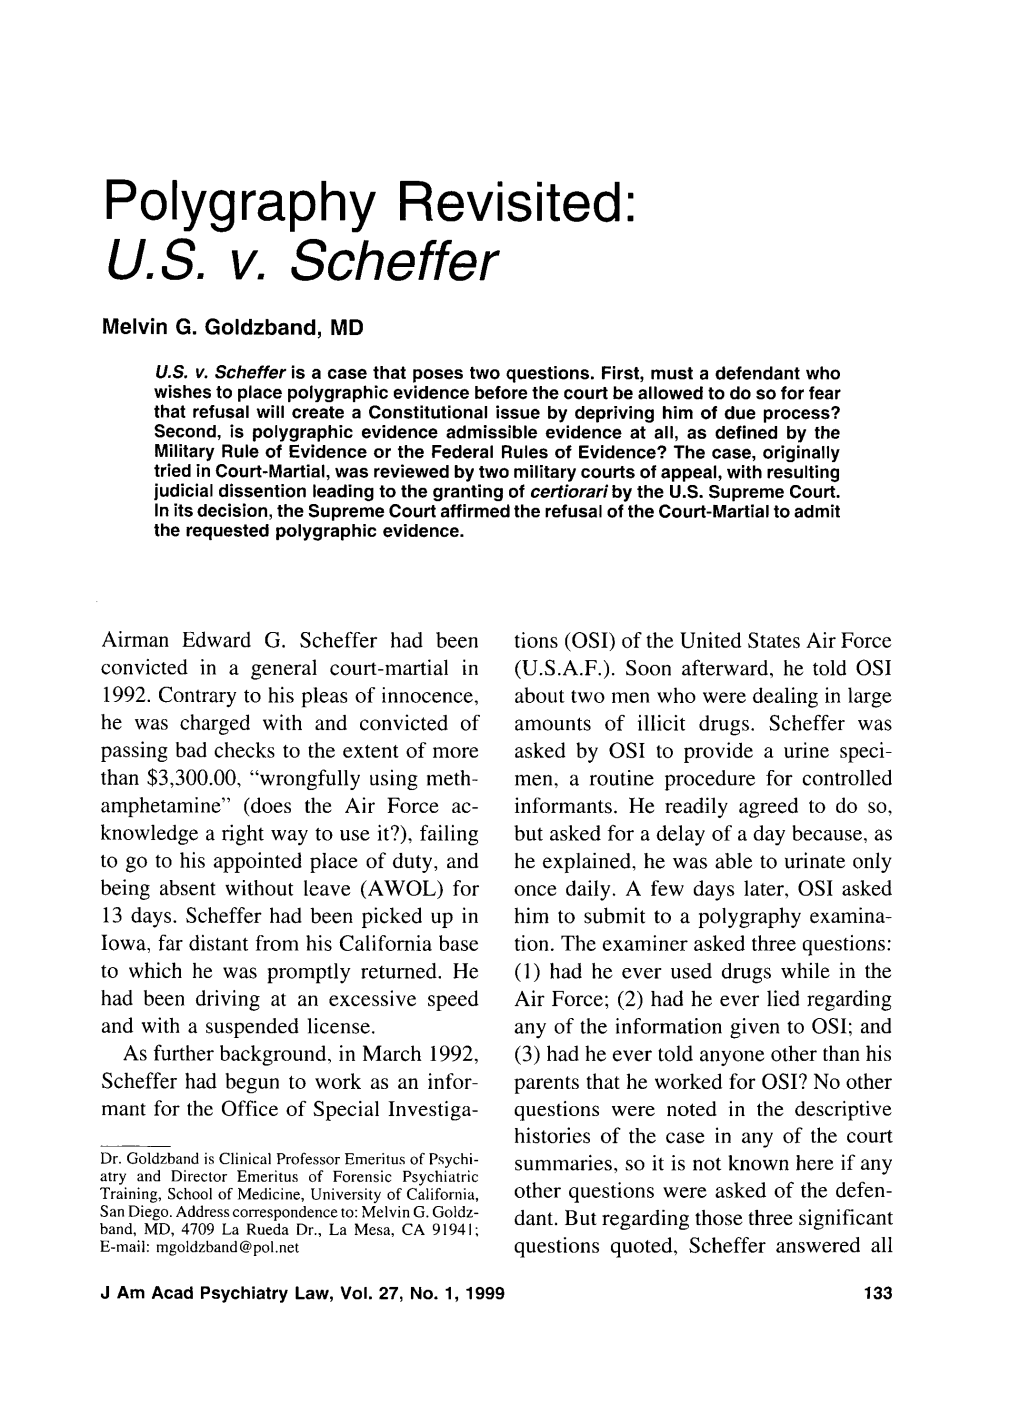 Polygraphy Revisited: U. S. V. Sche Ffer